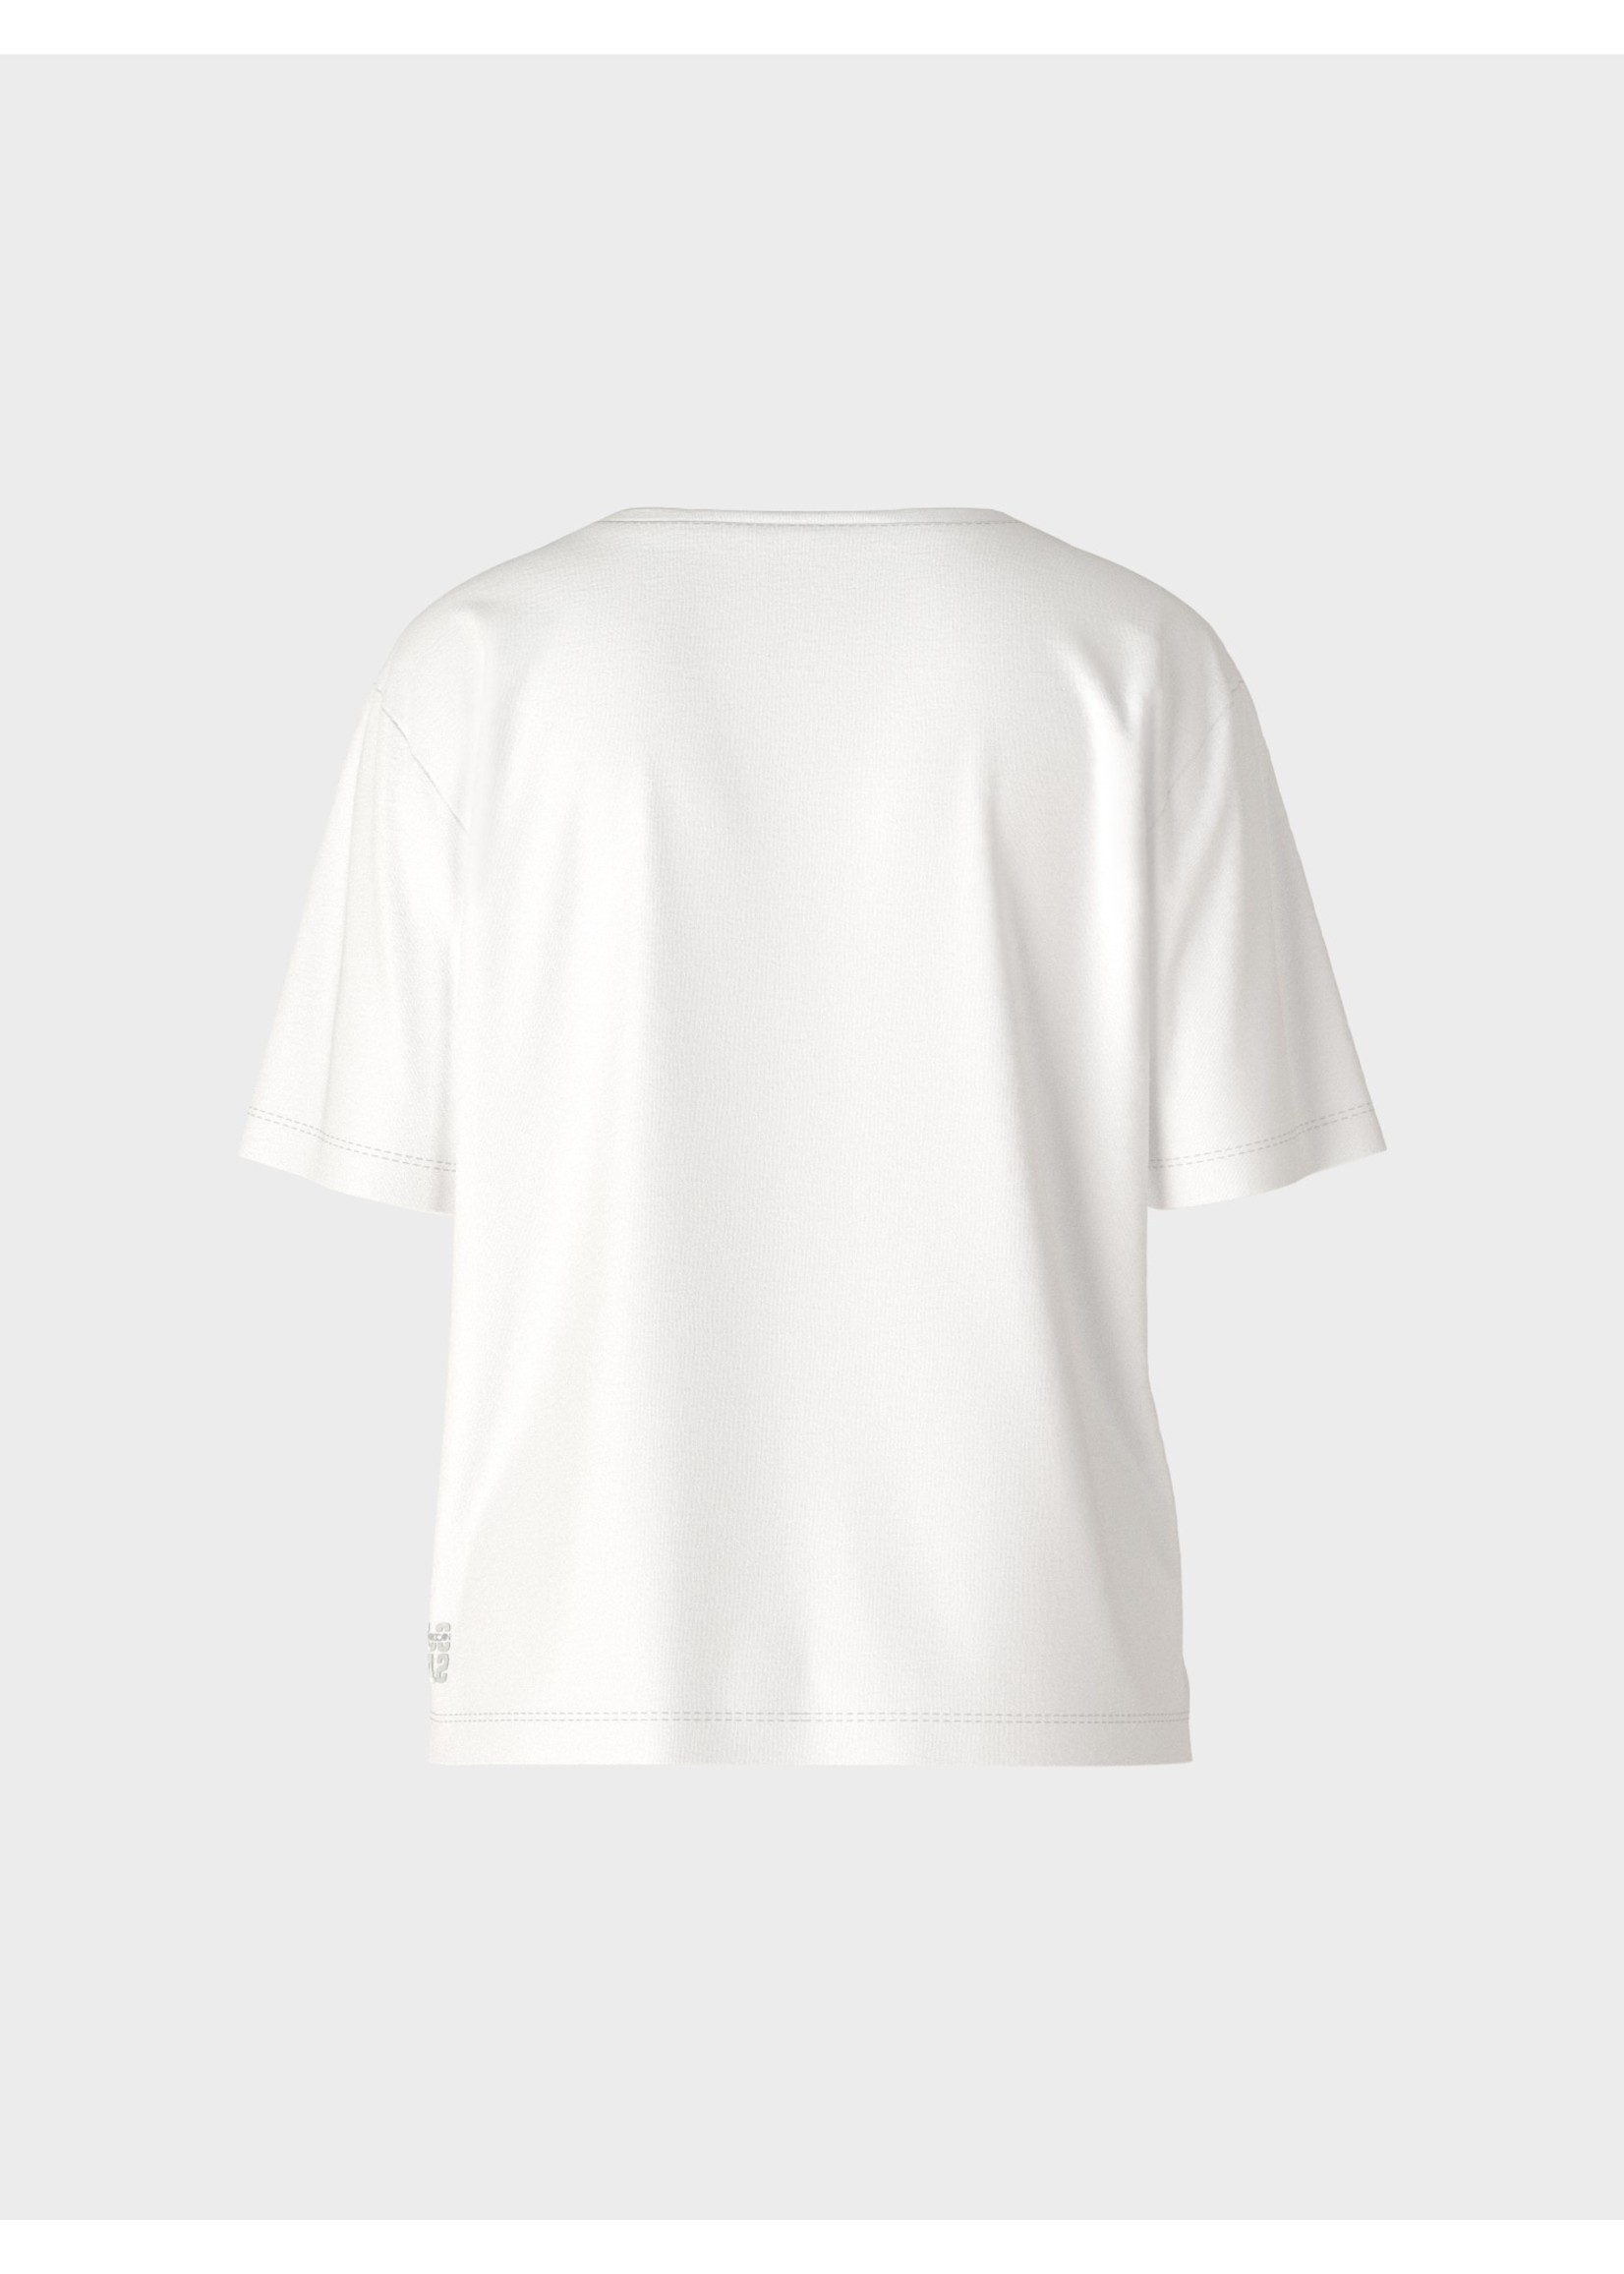 Marccain Sports T-shirt US 48.21 J71 100